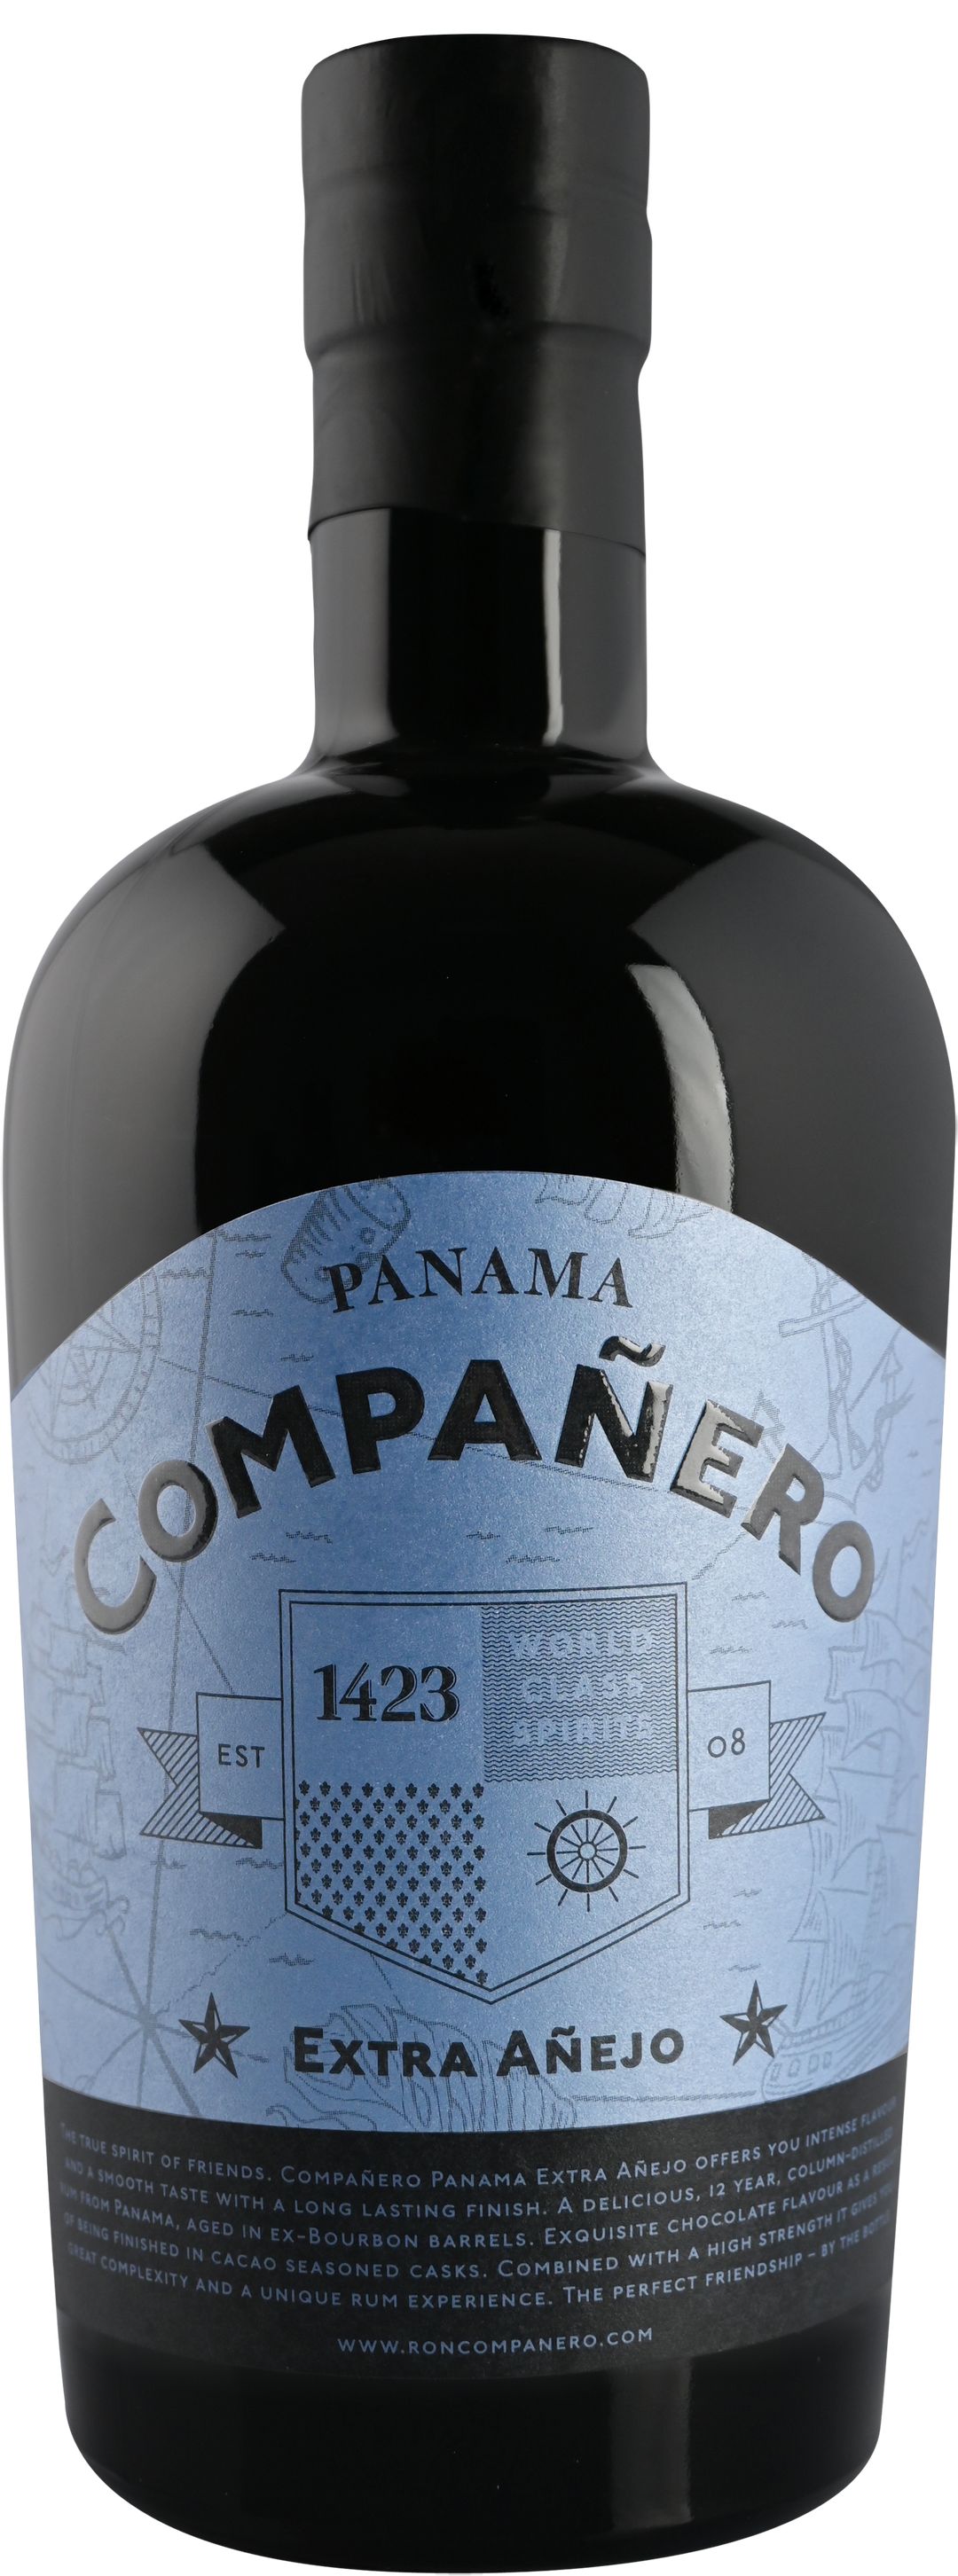 1423 World Class Spirits Compañero PANAMA Extra Añejo Rum 0,7L